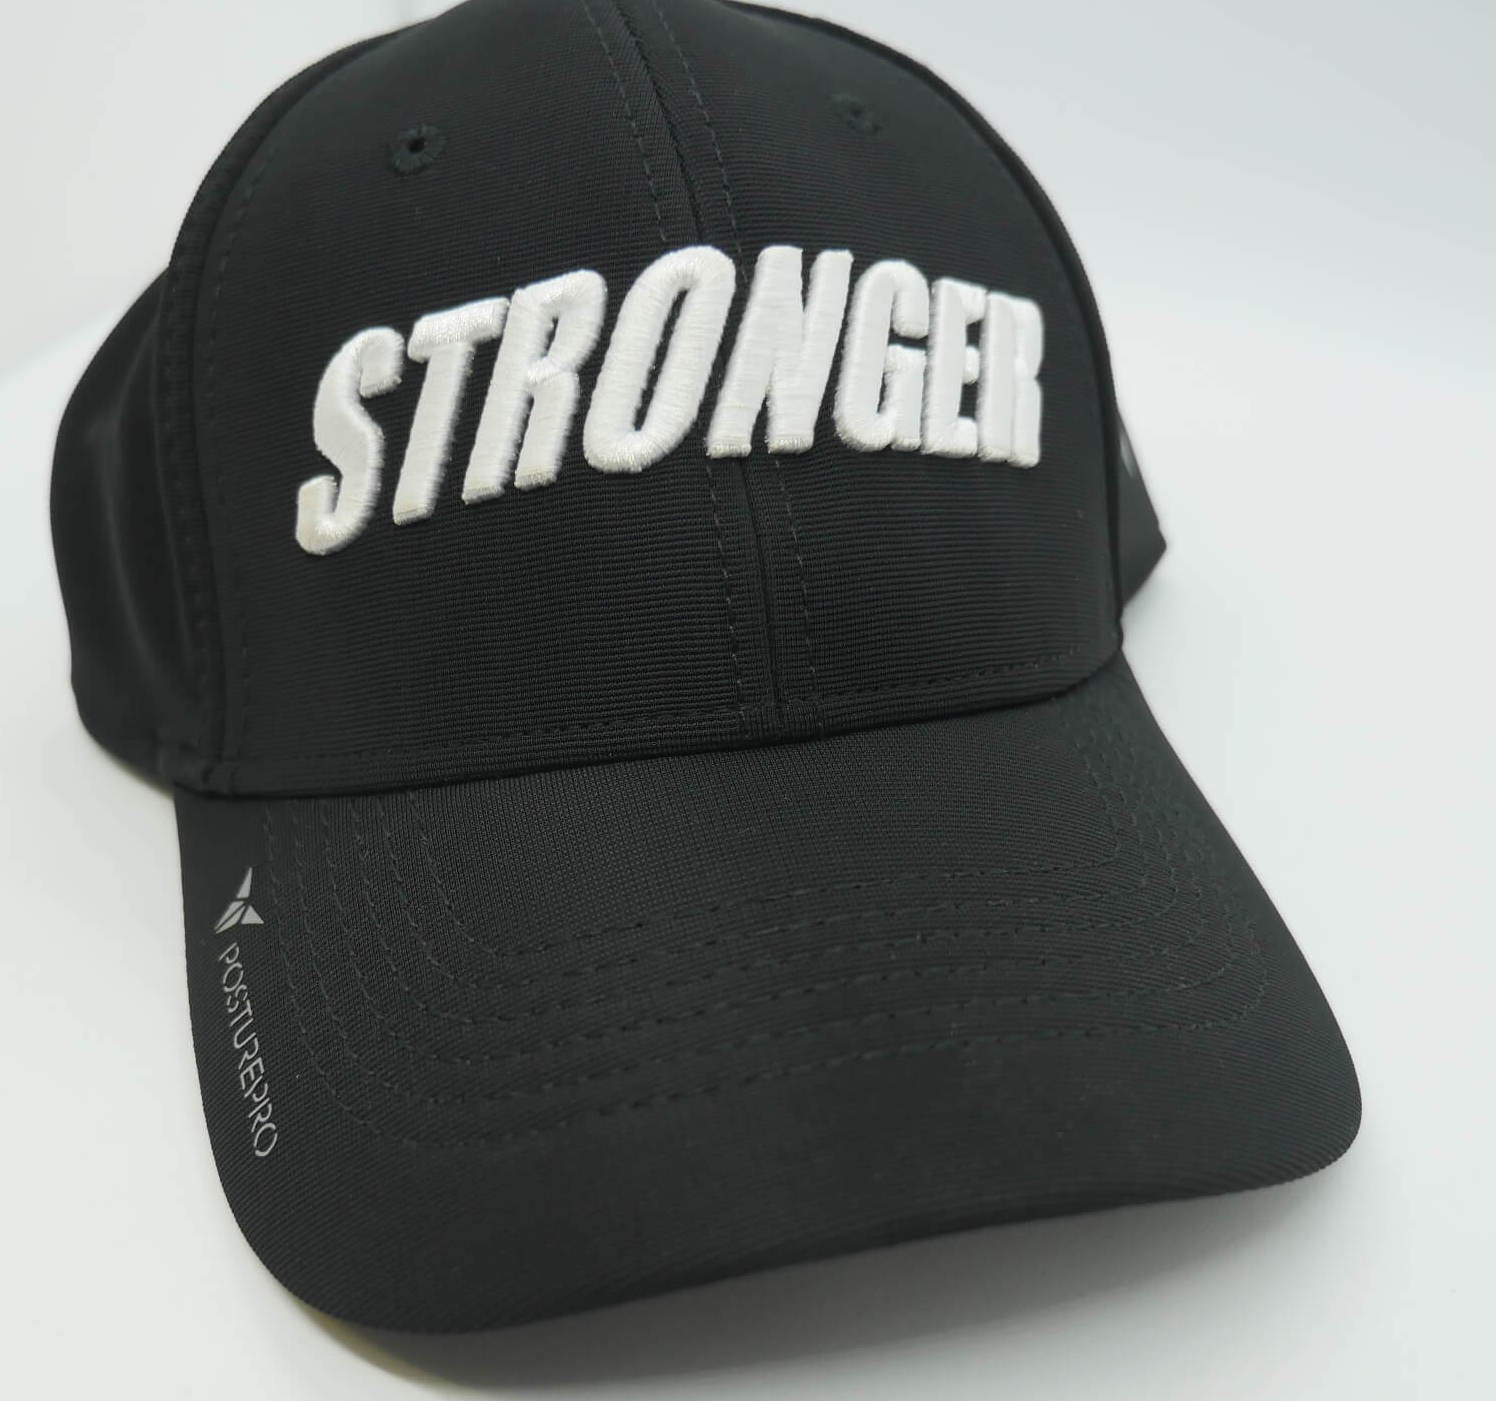 Stronger Cap